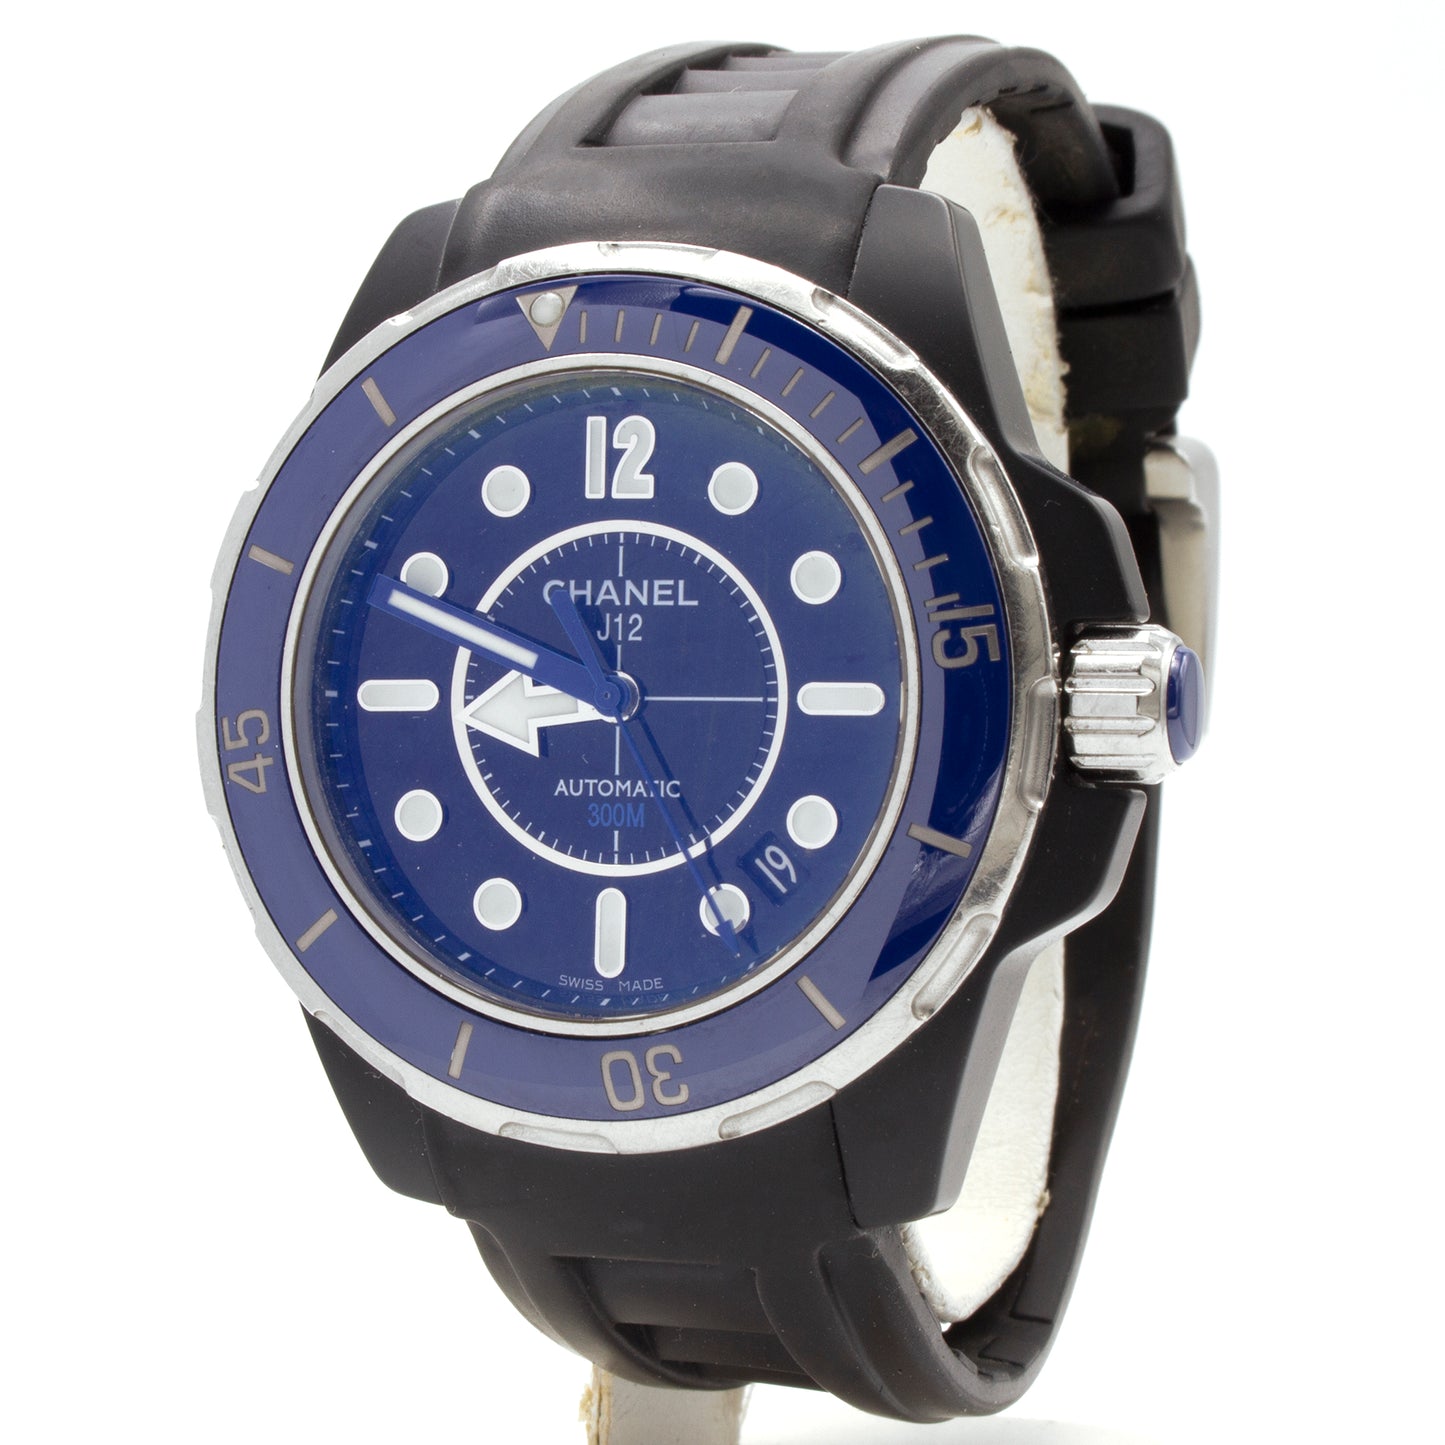 Chanel J12 Marine automatic watch